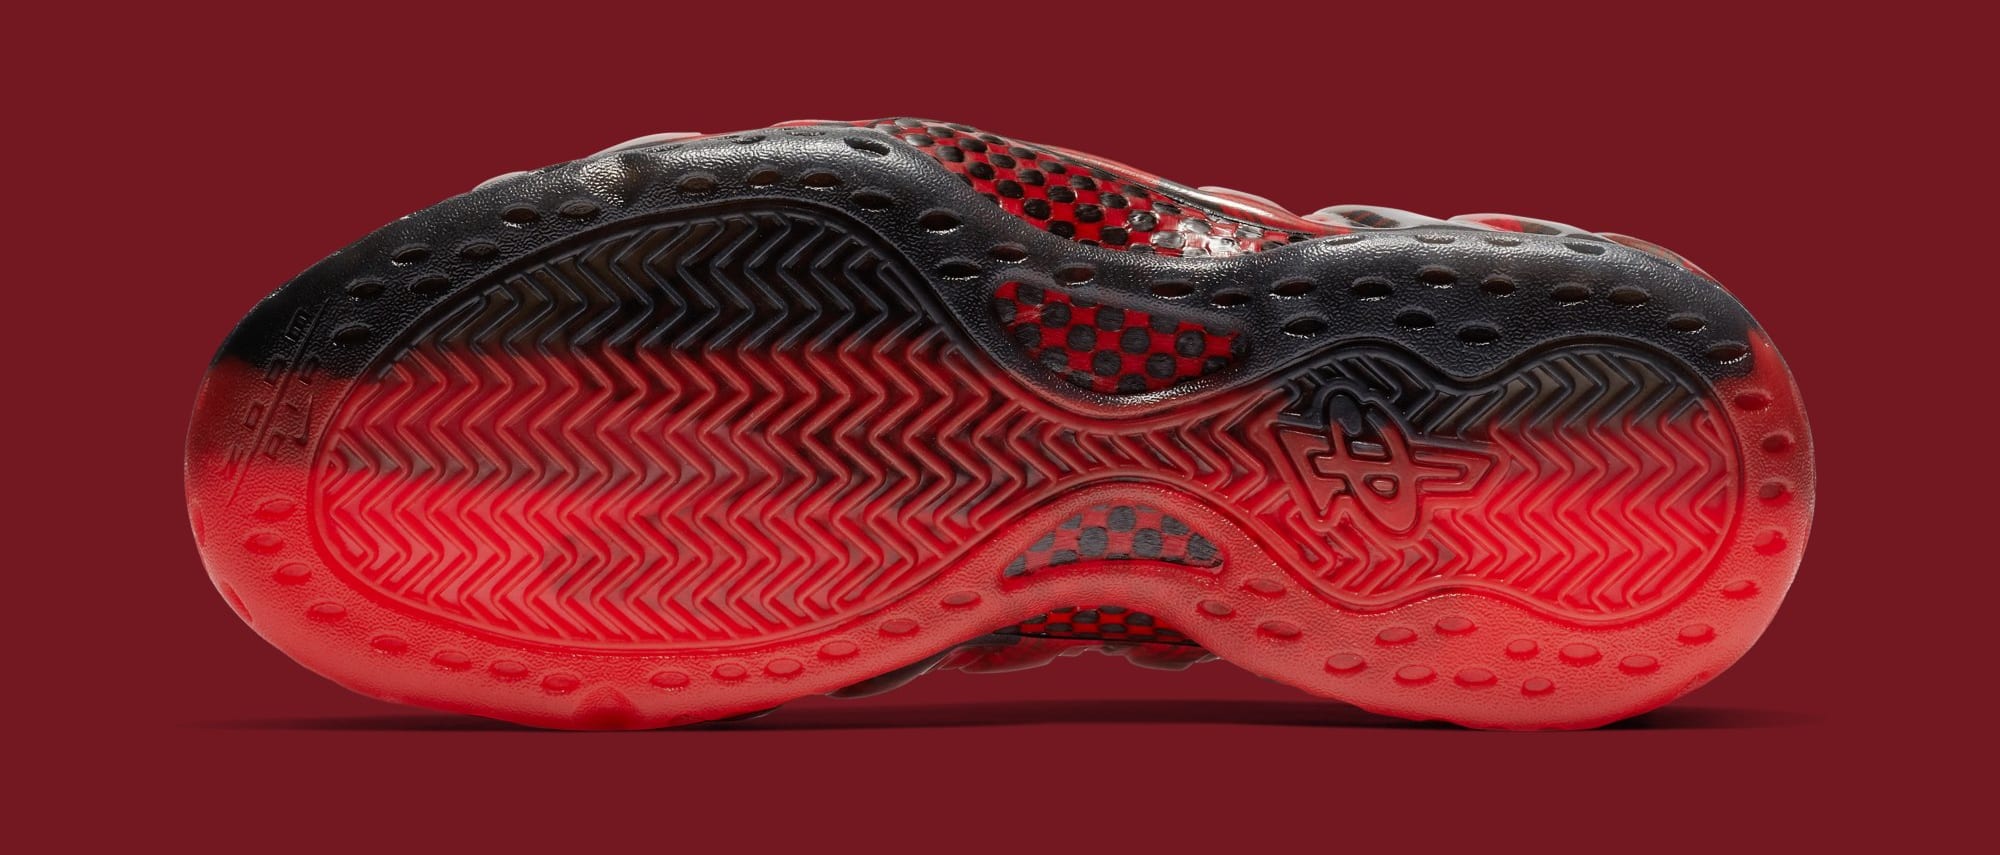 Nike Air Foamposite One &#x27;Doernbecher&#x27; Challenge Red/Black 641745-600 (Bottom)